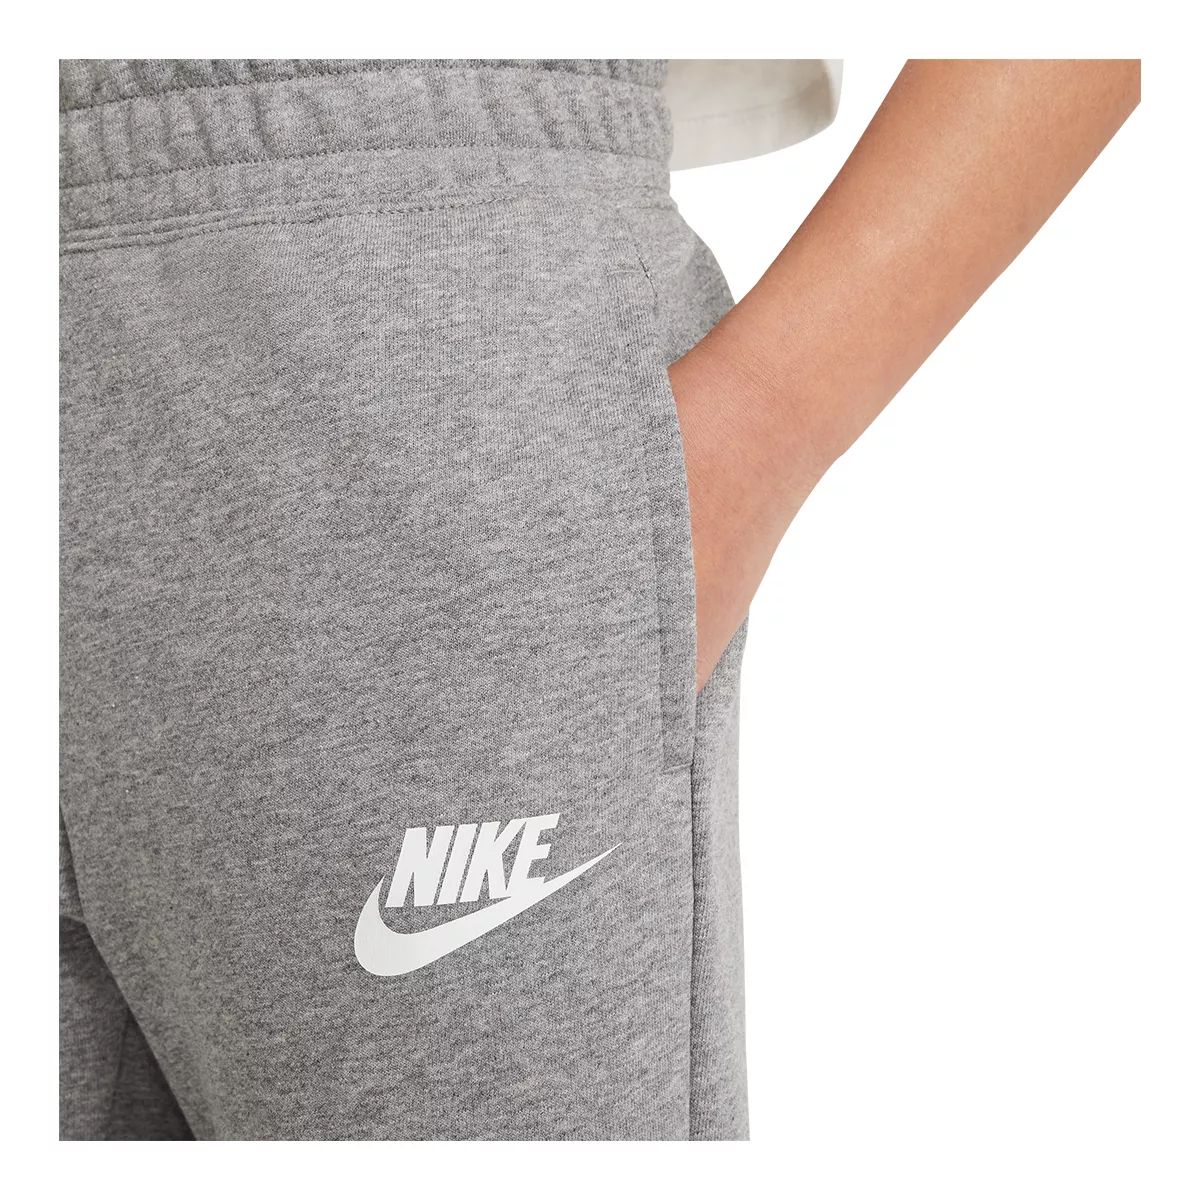 Nike Swoosh Just Do It Track Pants Jogger Trousers Girls Blue CJ7421-433 Lg  NWT